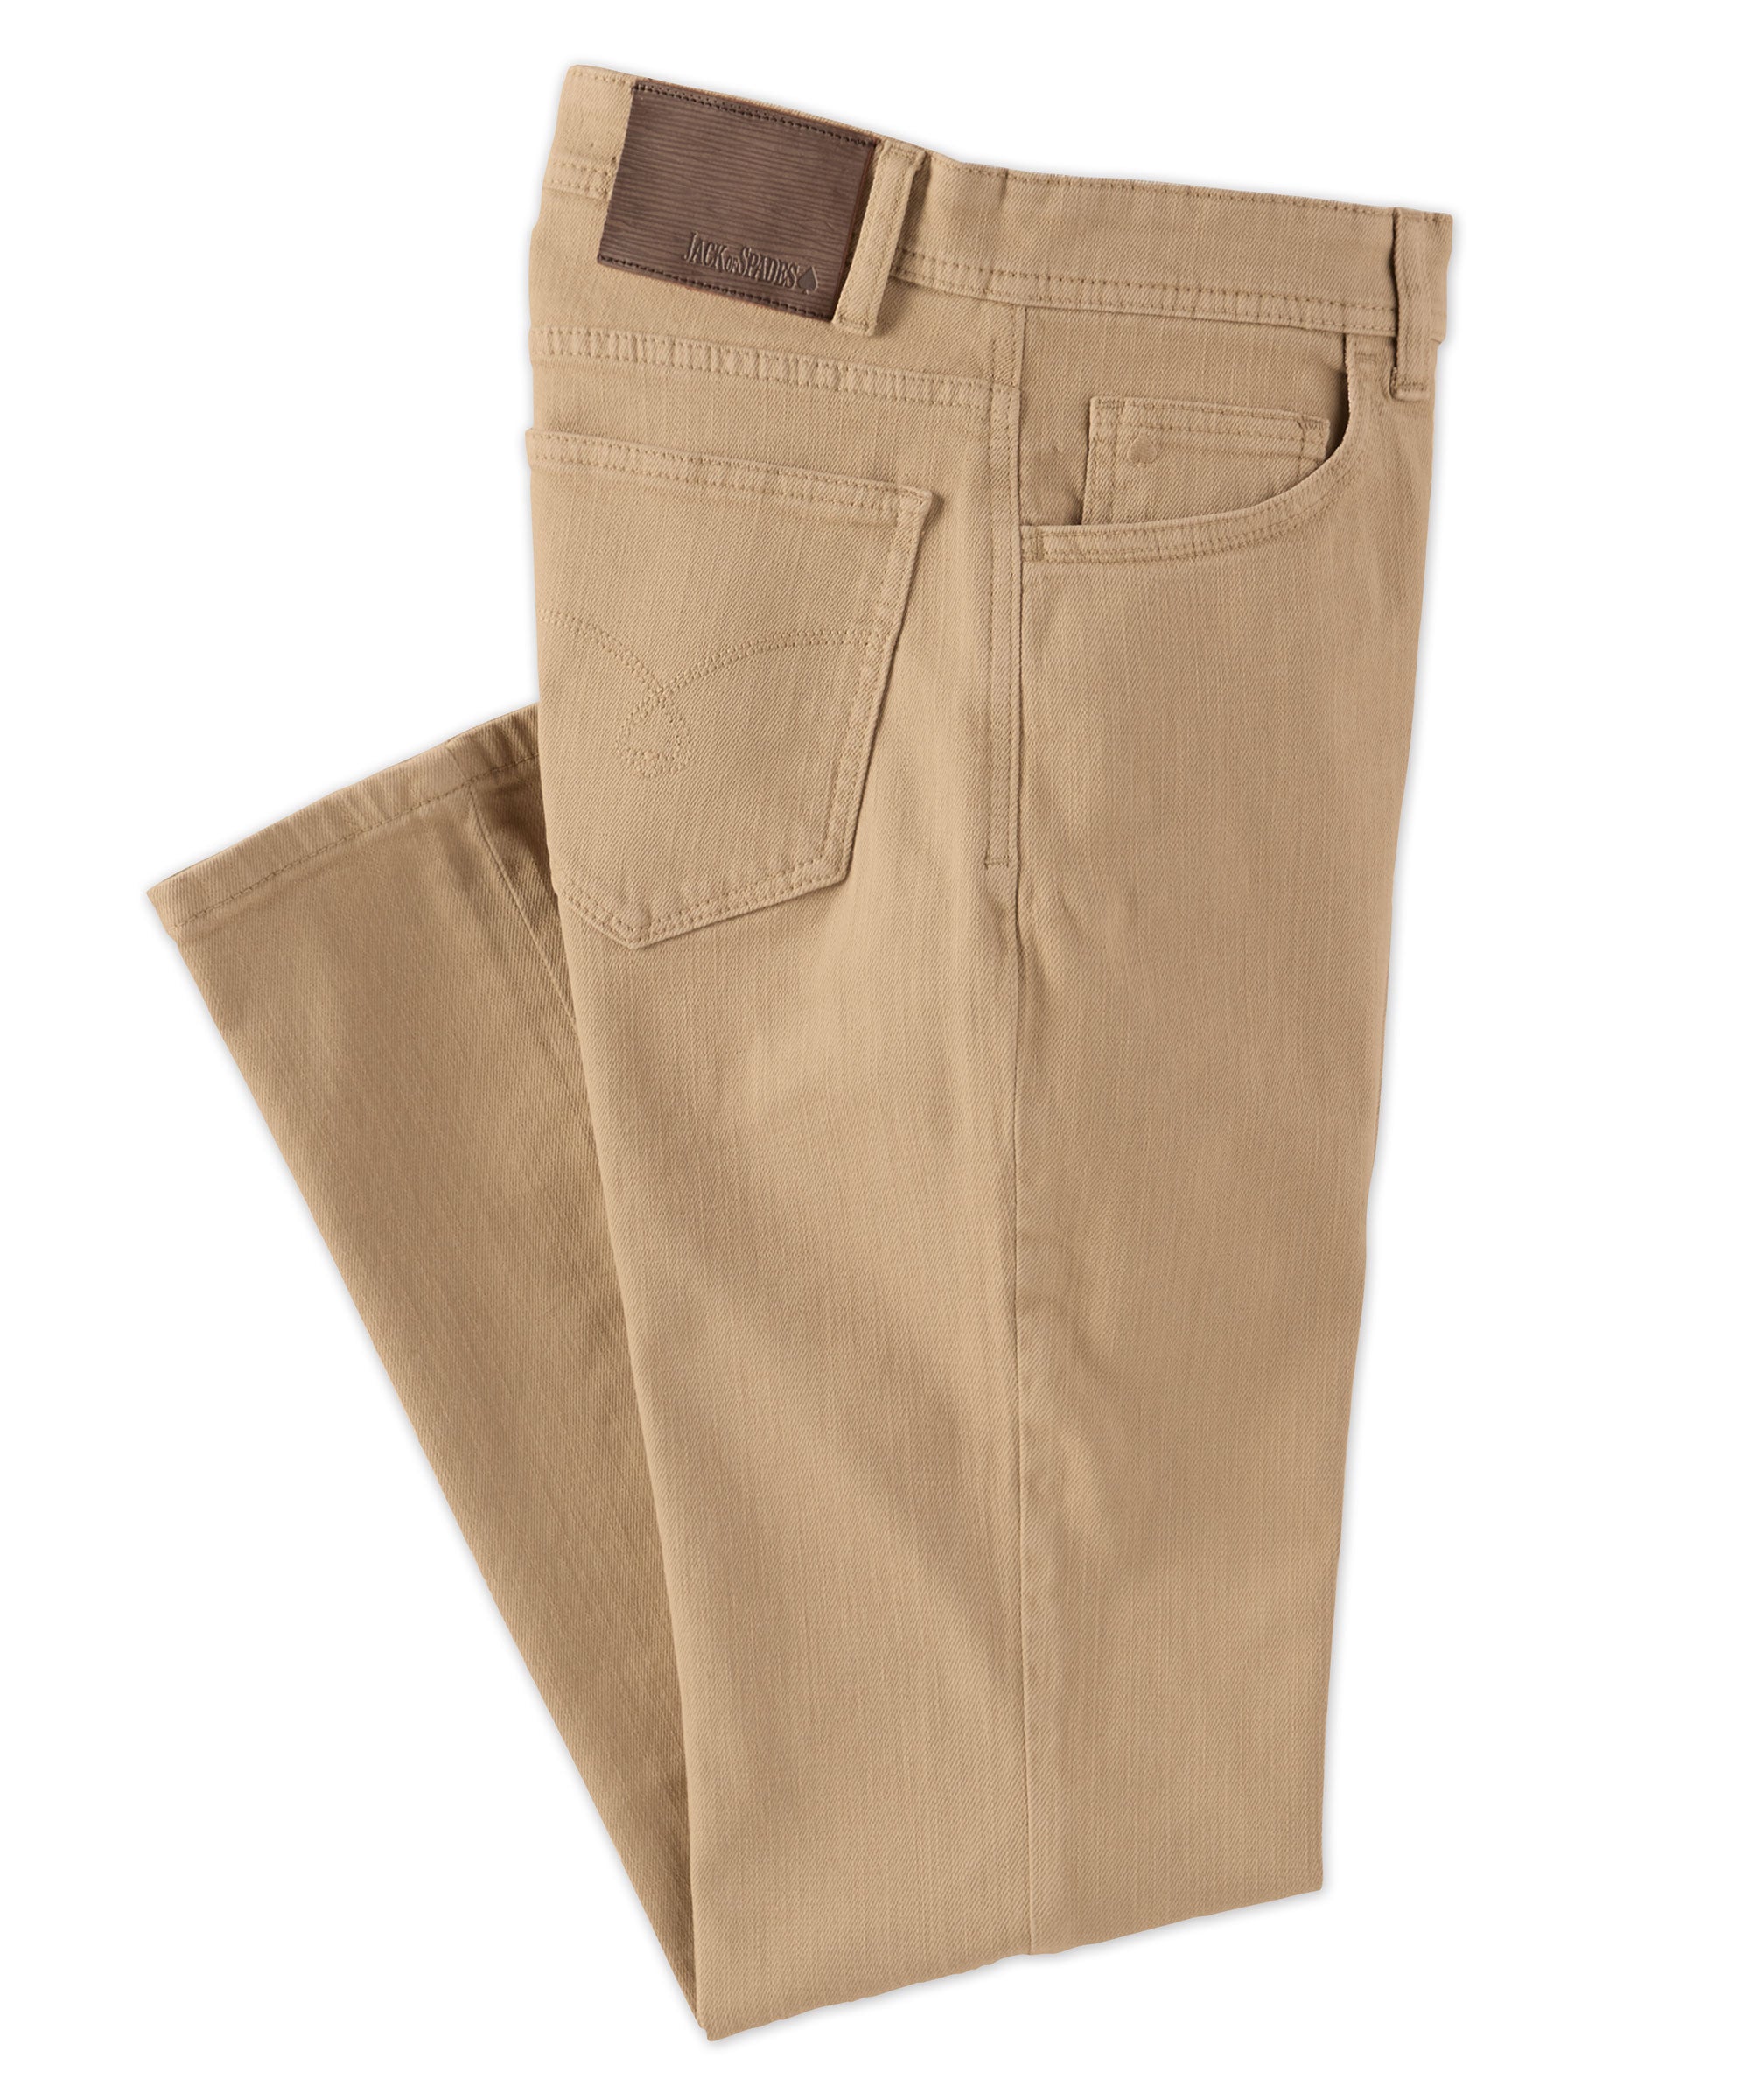 Men's 5-Pocket Twill Pants